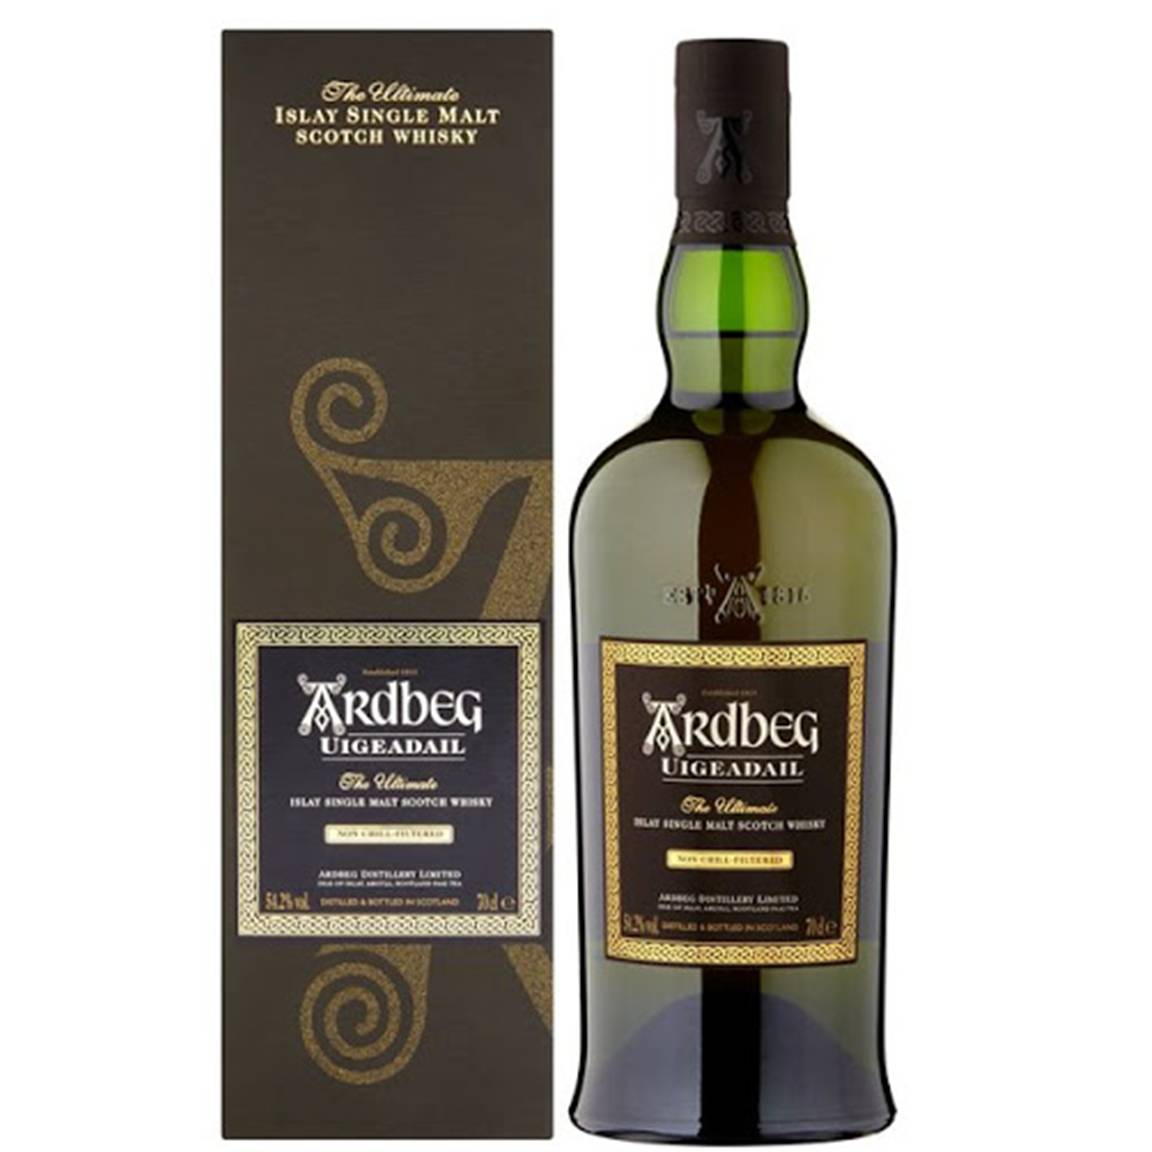 Ardbeg Uigeadail Single Malt Scotch Whisky – Islay Scotland